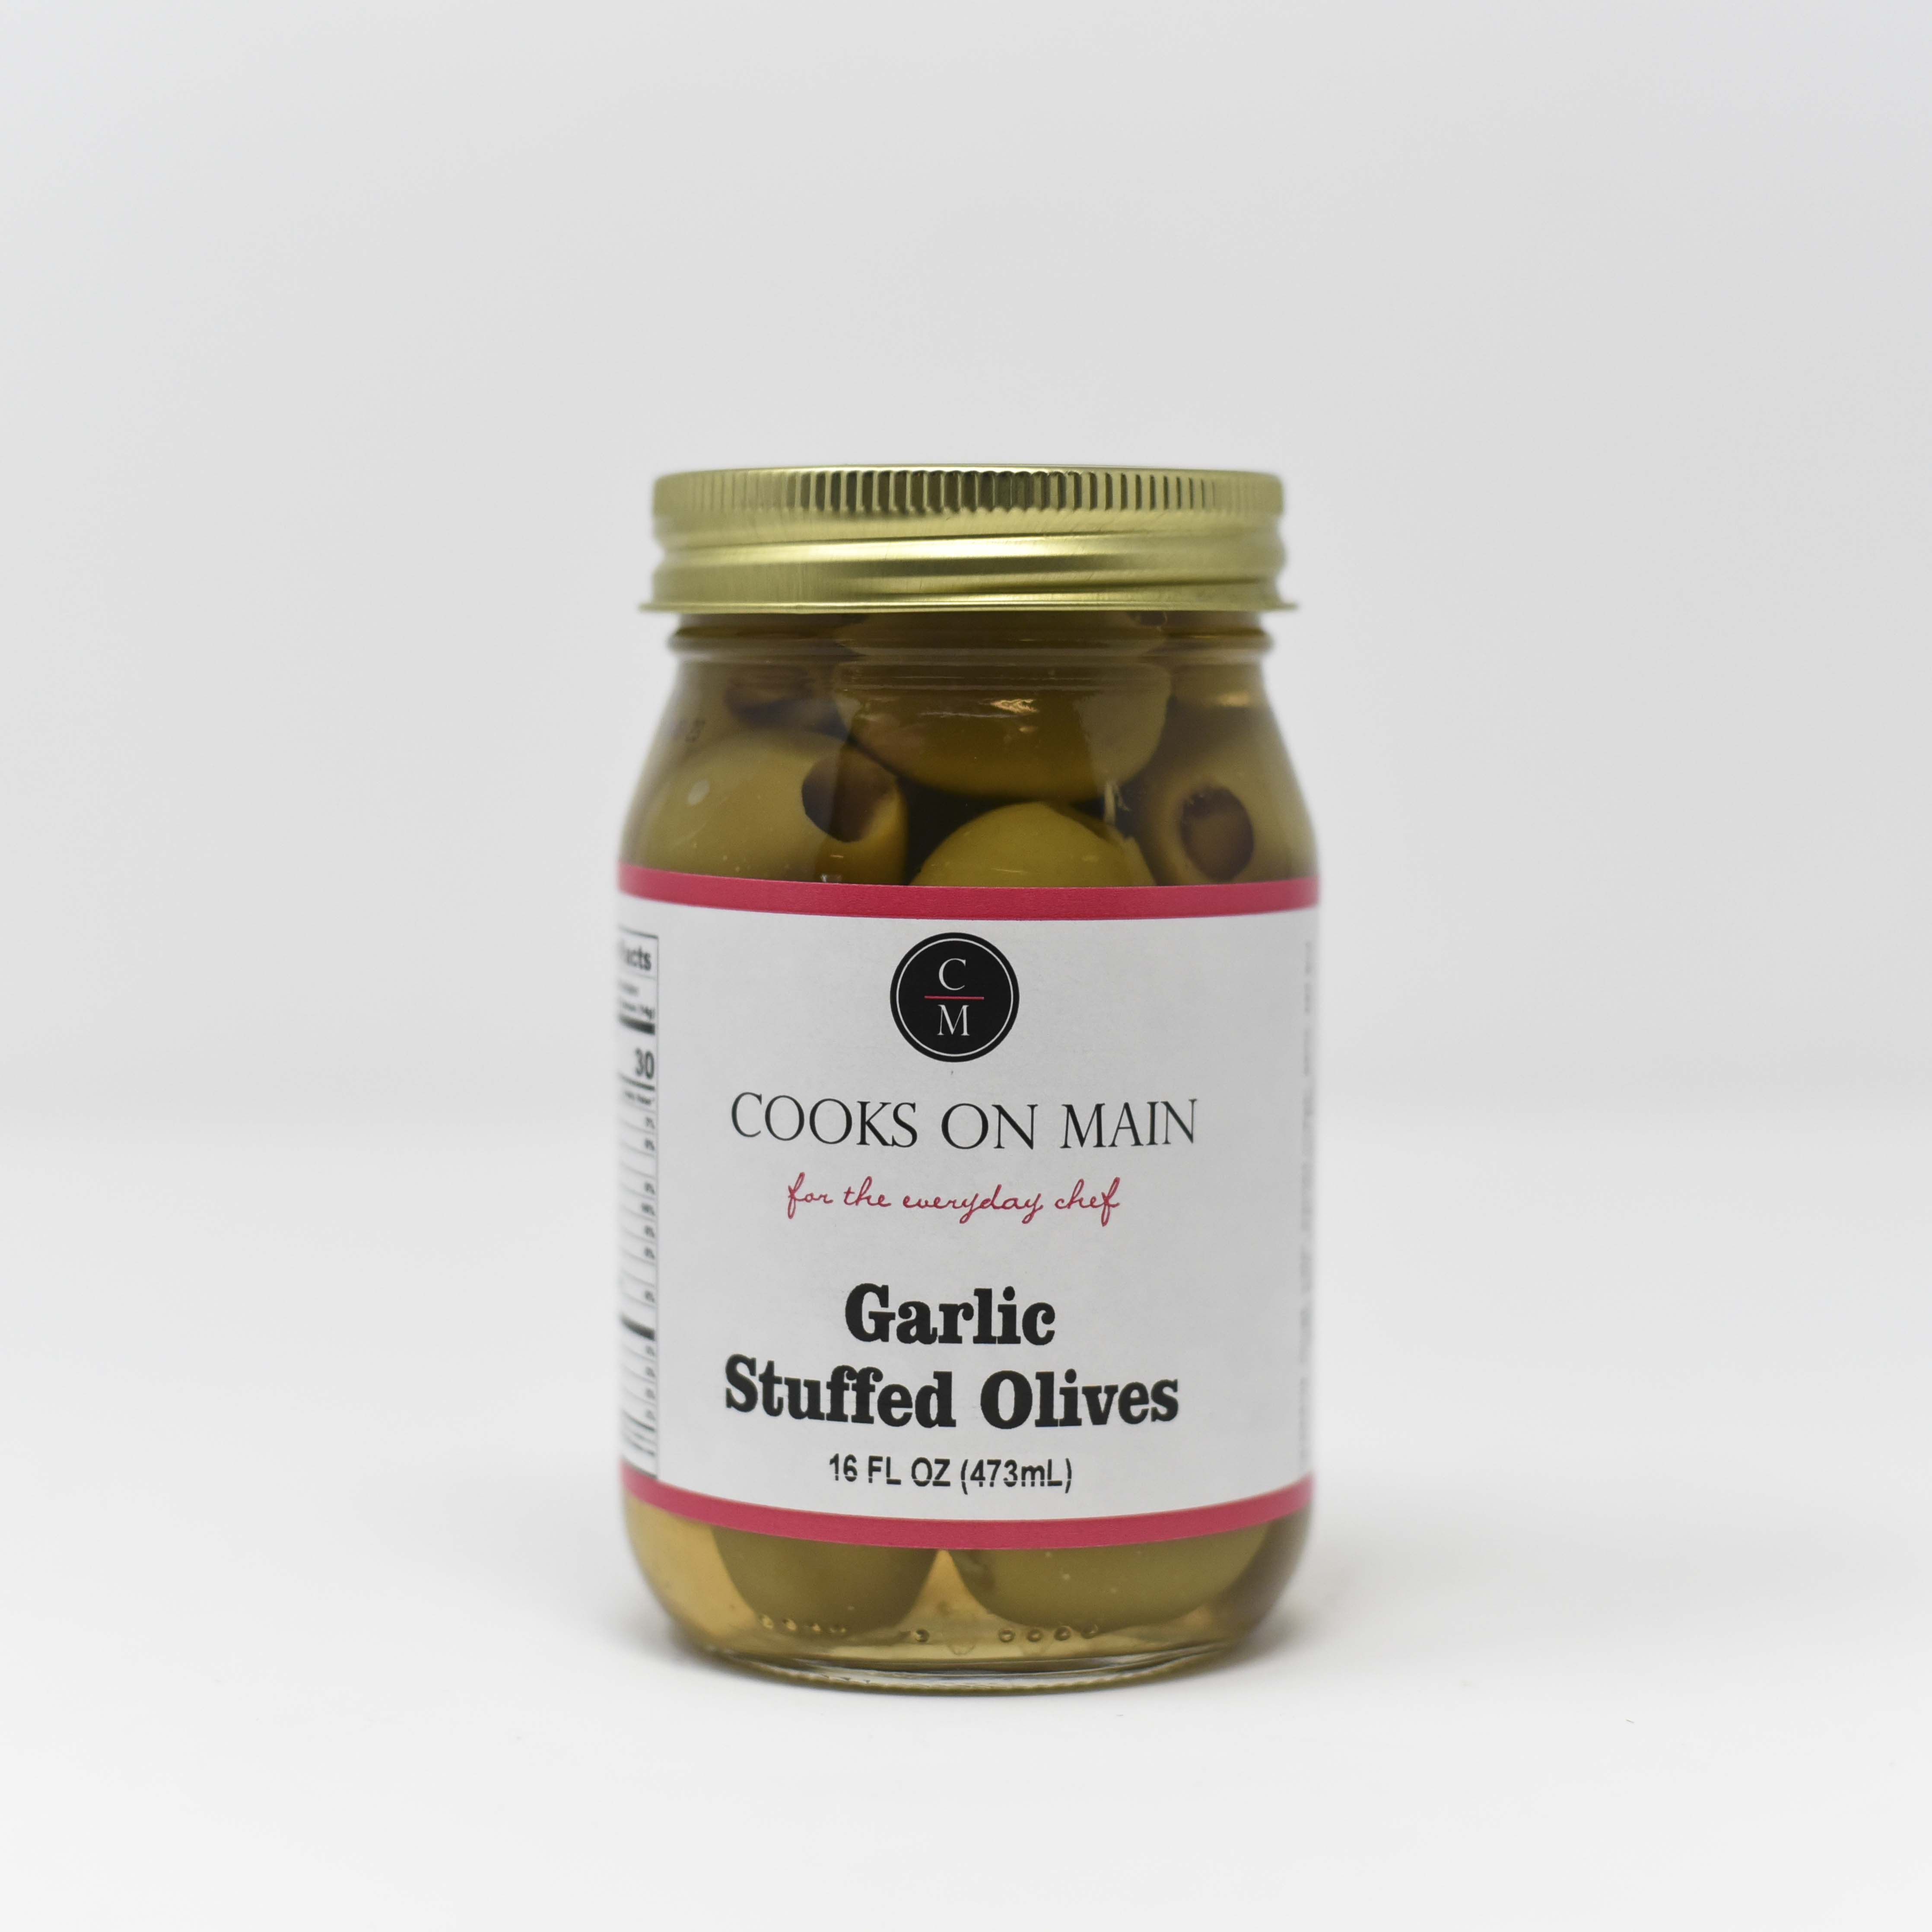 Crate&Barrel Chef'n ® GarlicCone ™ Garlic Peeler